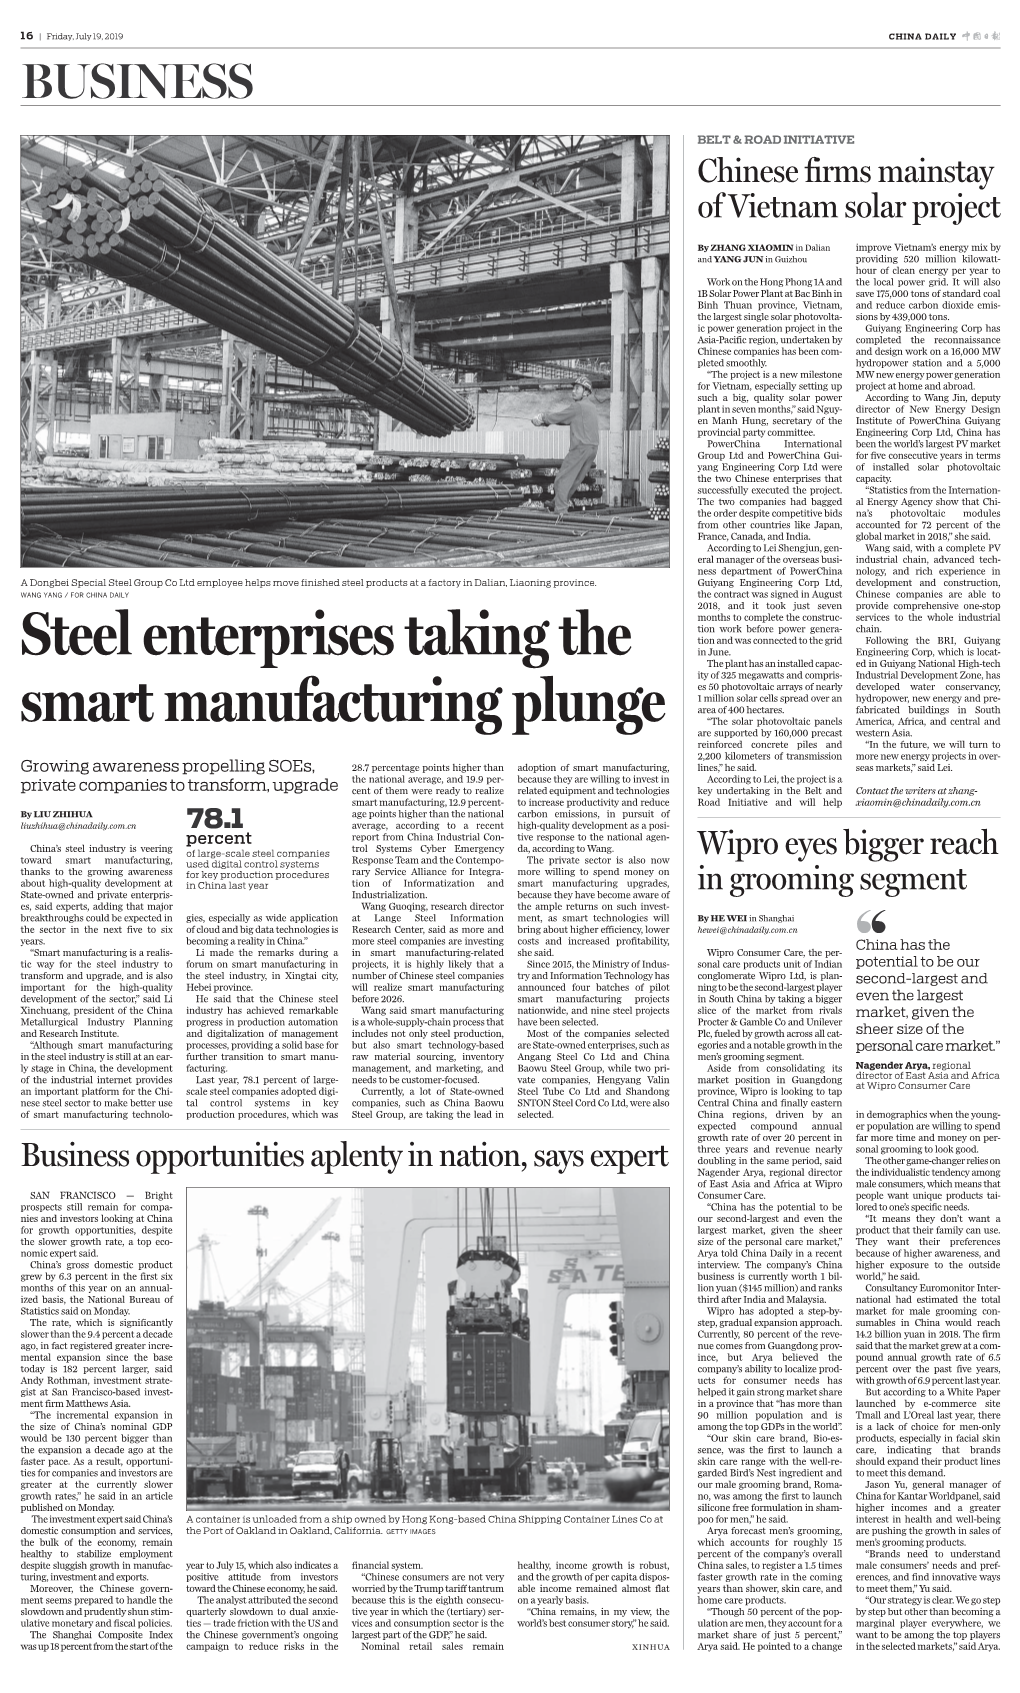 Steel Enterprises Taking the Smart Manufacturing Plunge